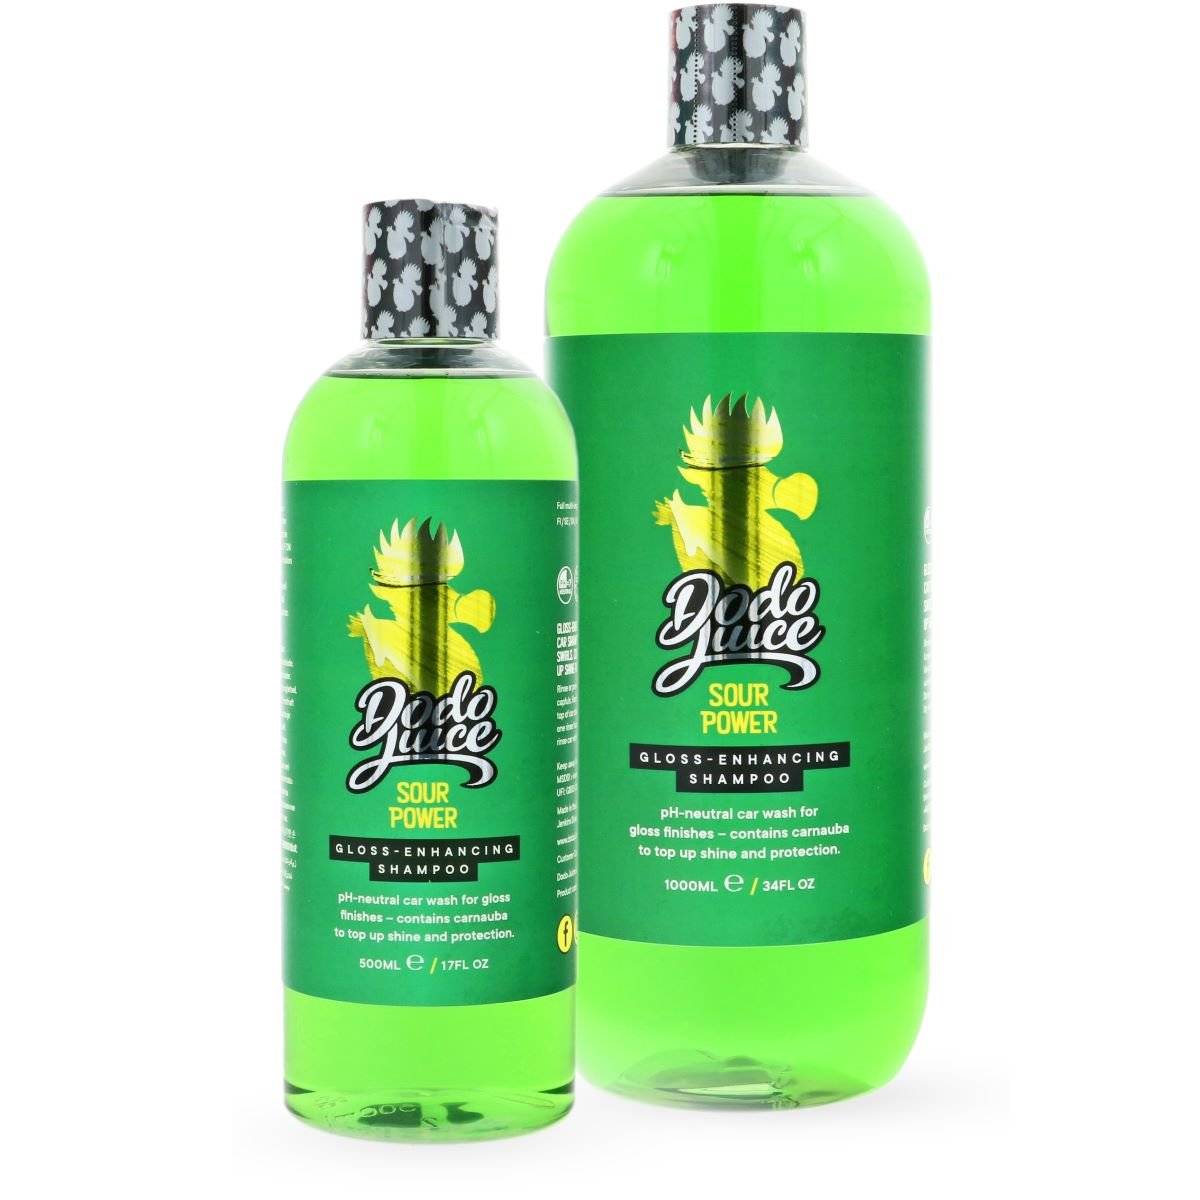 Sour Power Gloss-enhancing Shampoo